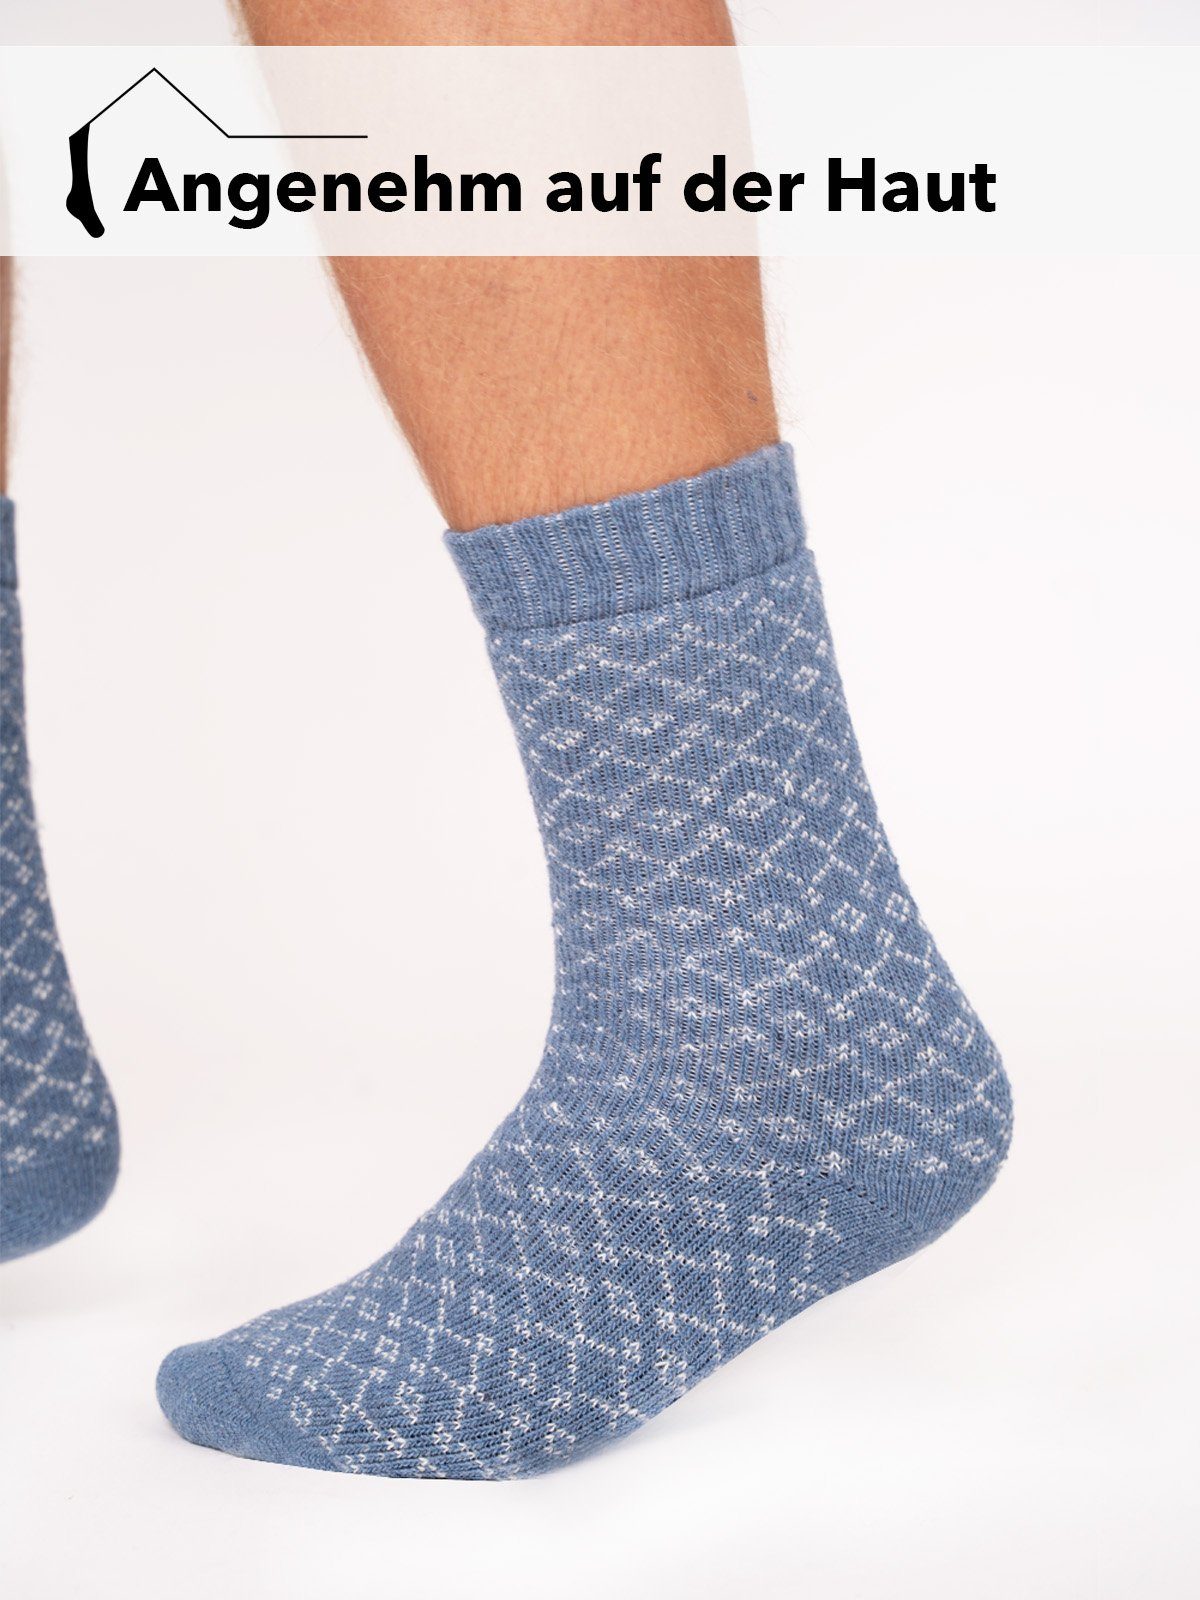 Hygge Wollanteil Hellblau Bunten 45% Socken Mit Socken mit Socken Hohem Herren HomeOfSocks Für In Dick Design & Dicke Warm Wolle Hyggelig Damen